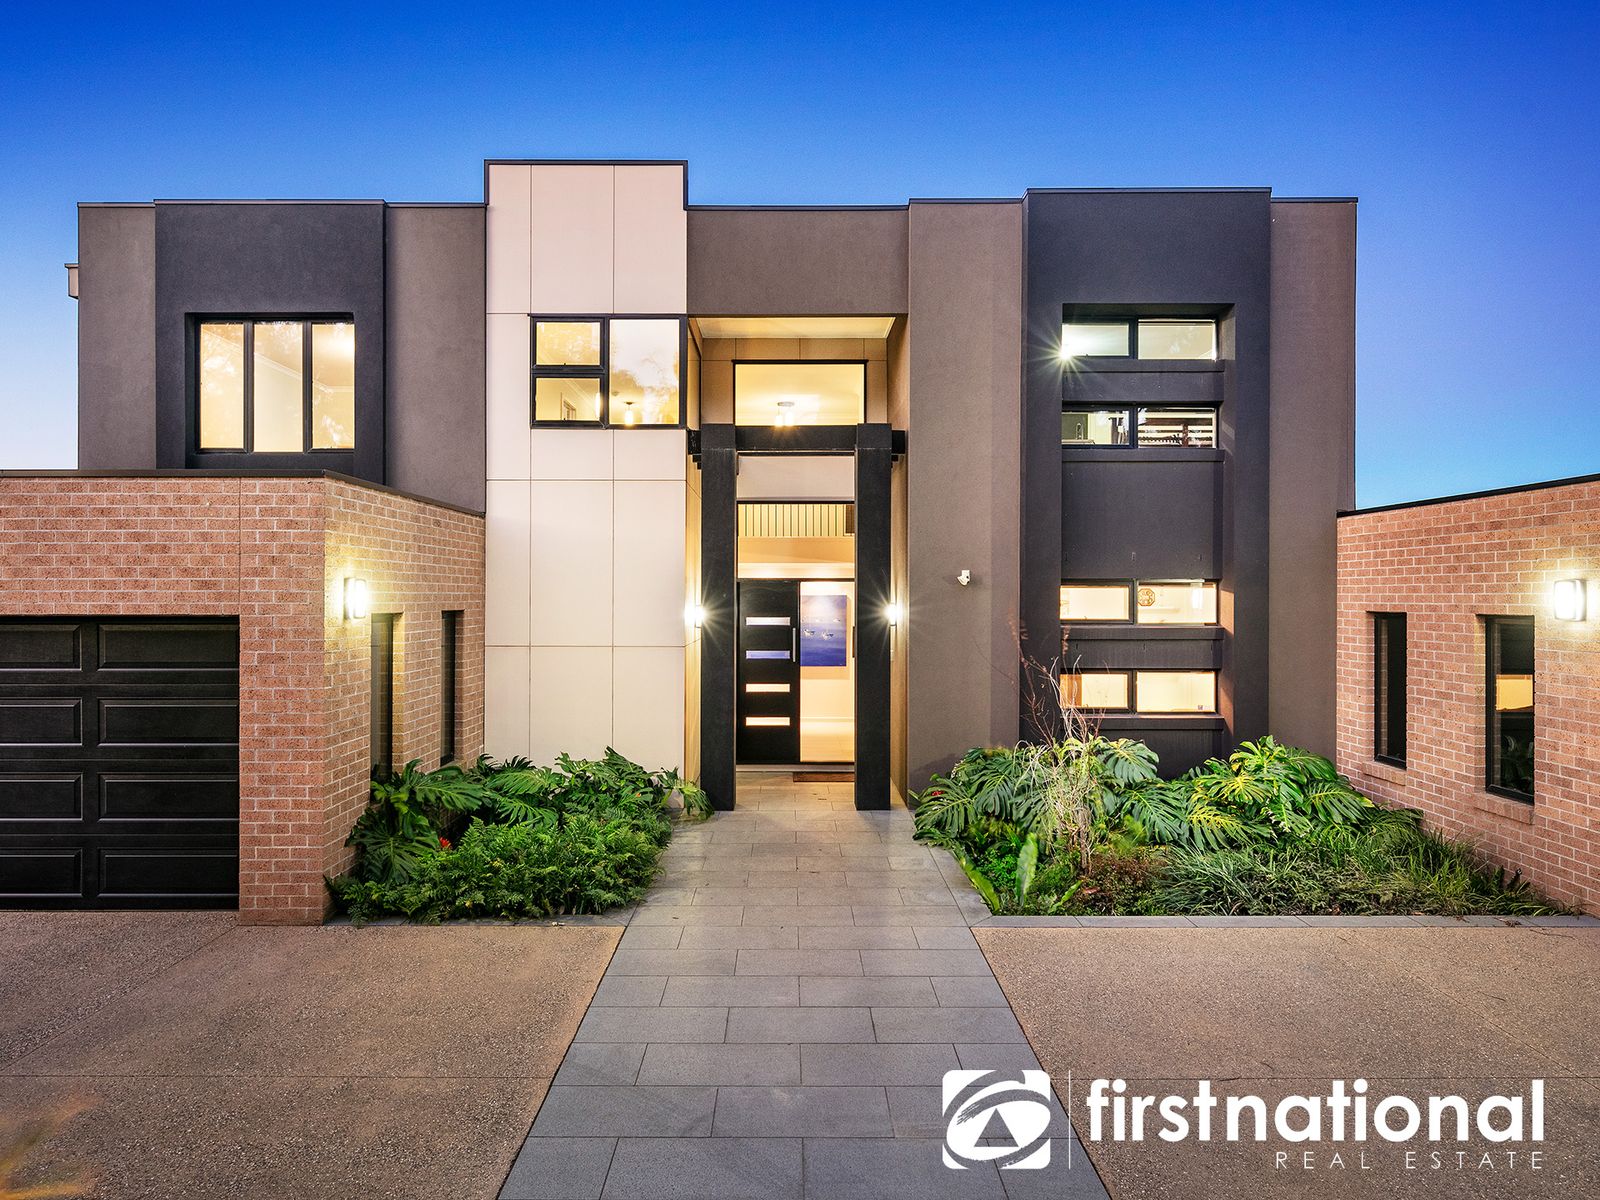 104 Brundrett Rd Narre Warren North Vic 3804 Australia House For Sale First National Real Estate